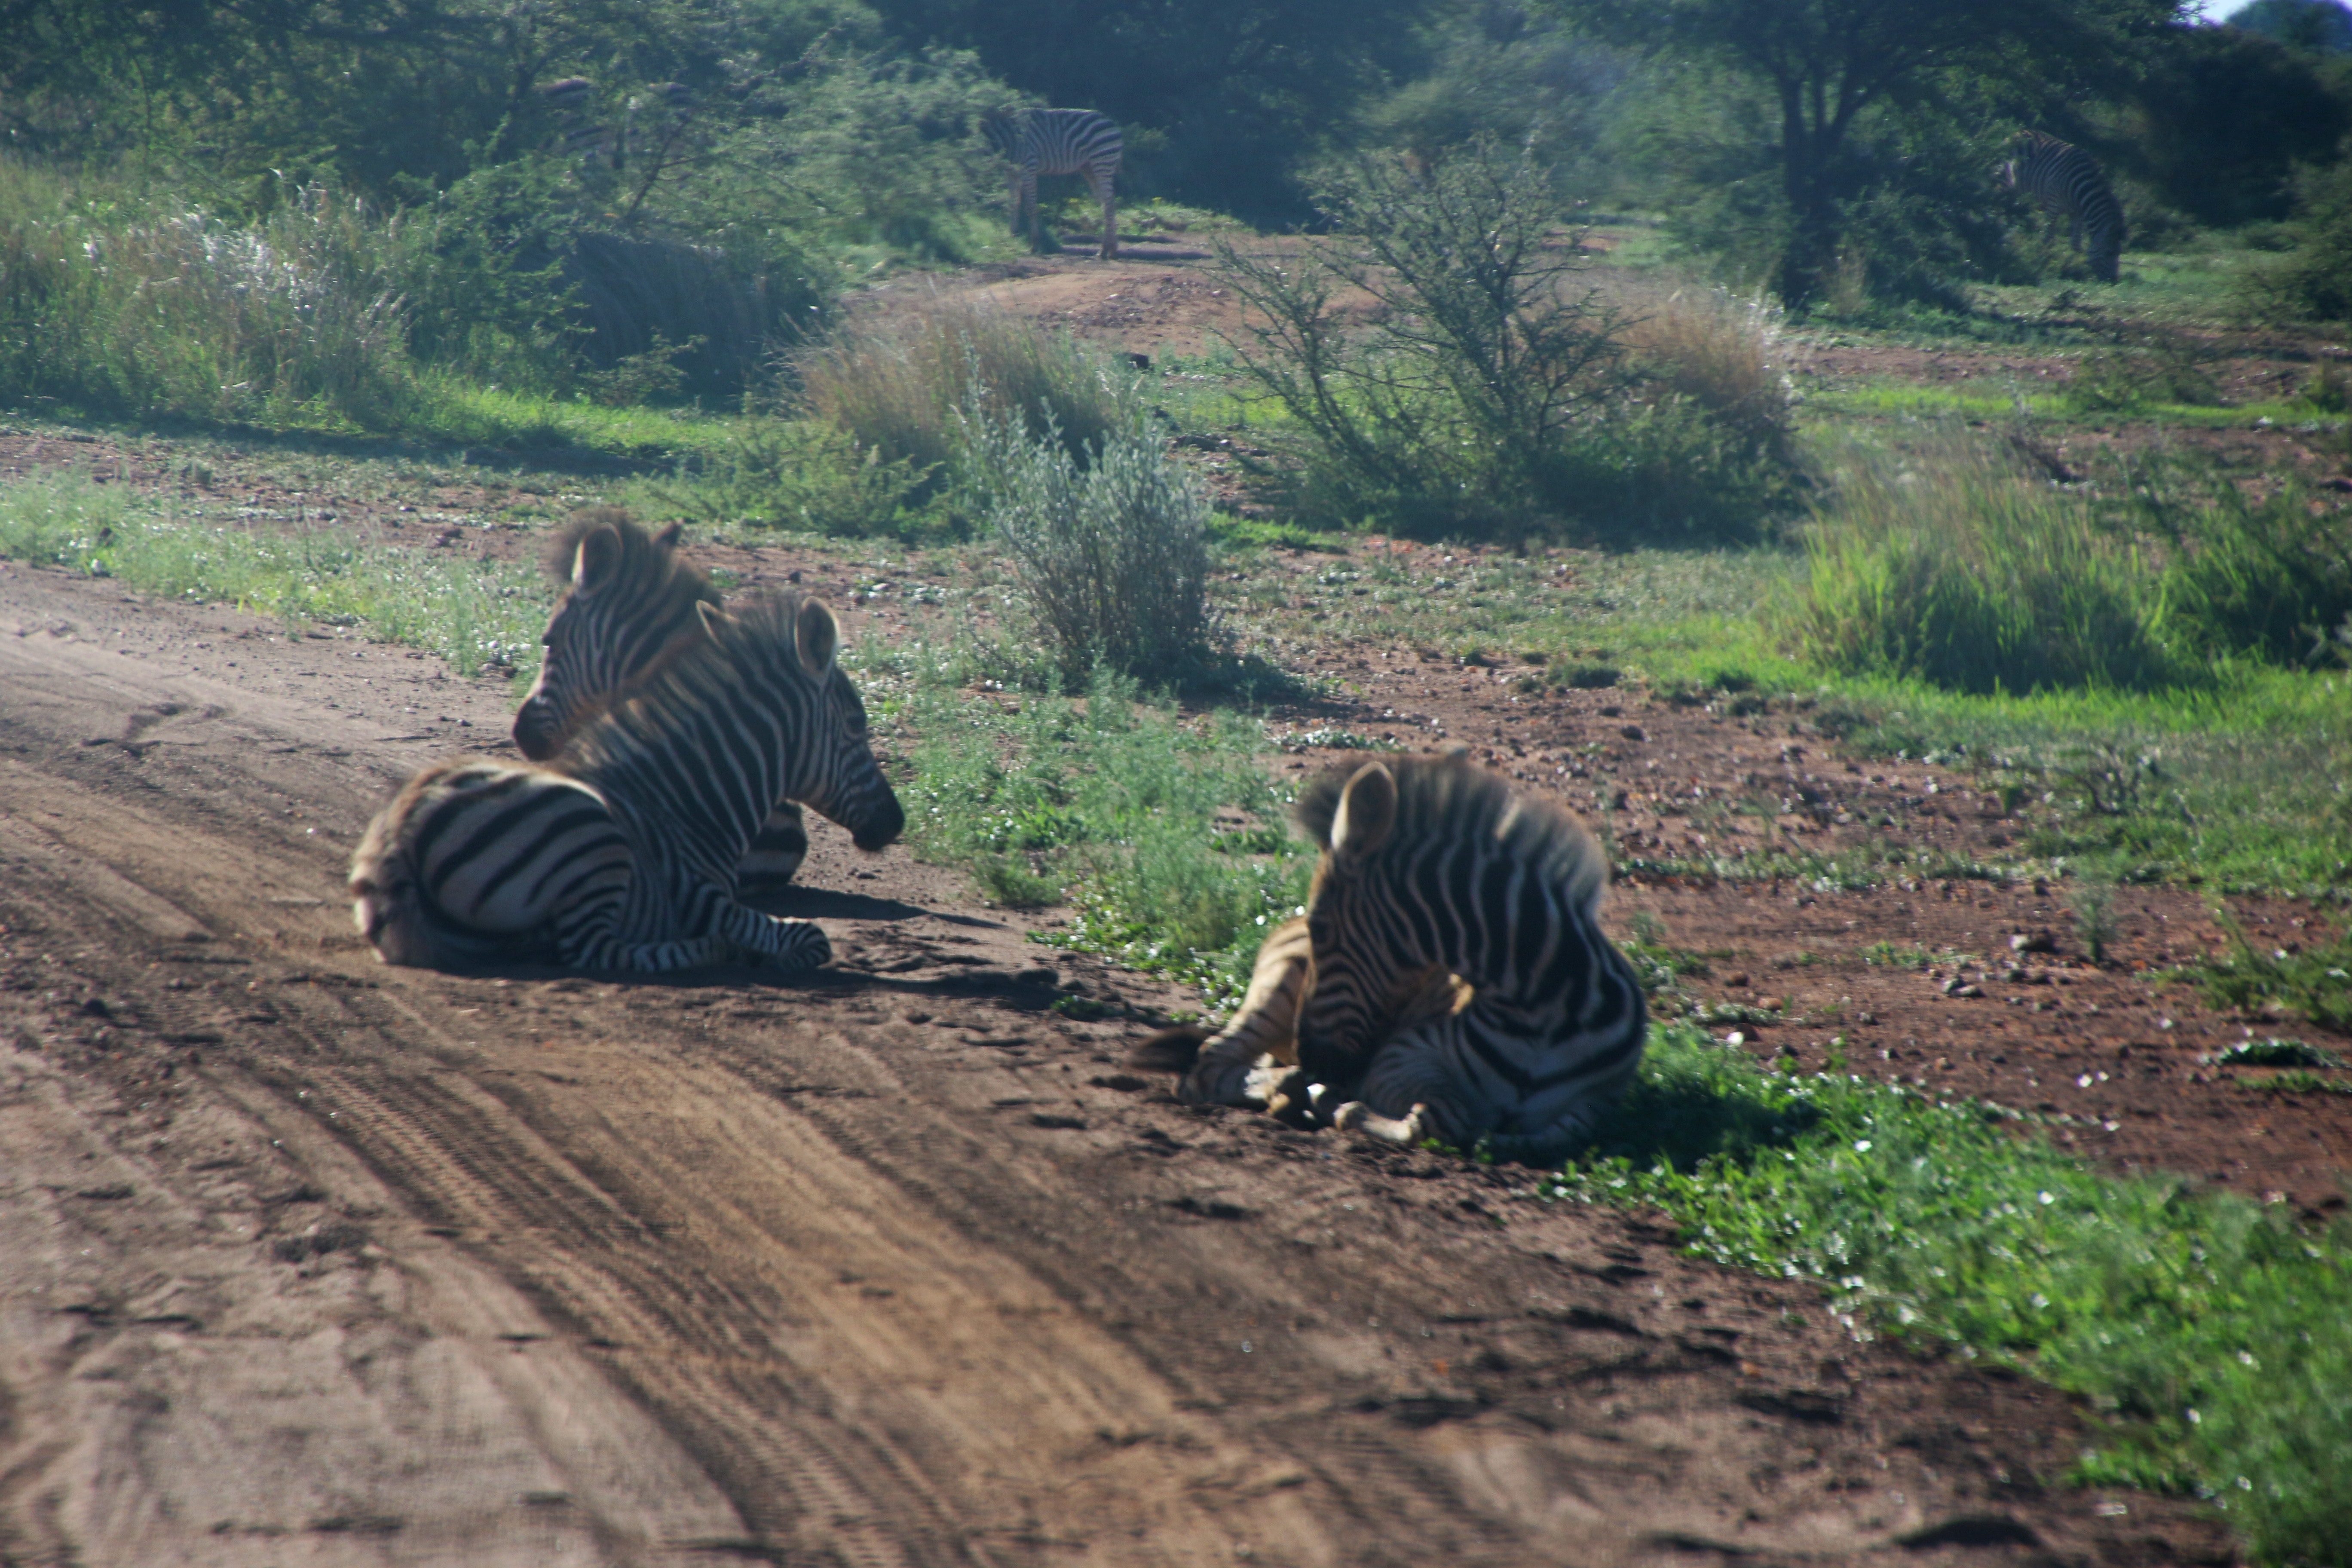 Photography of three zebras lying down